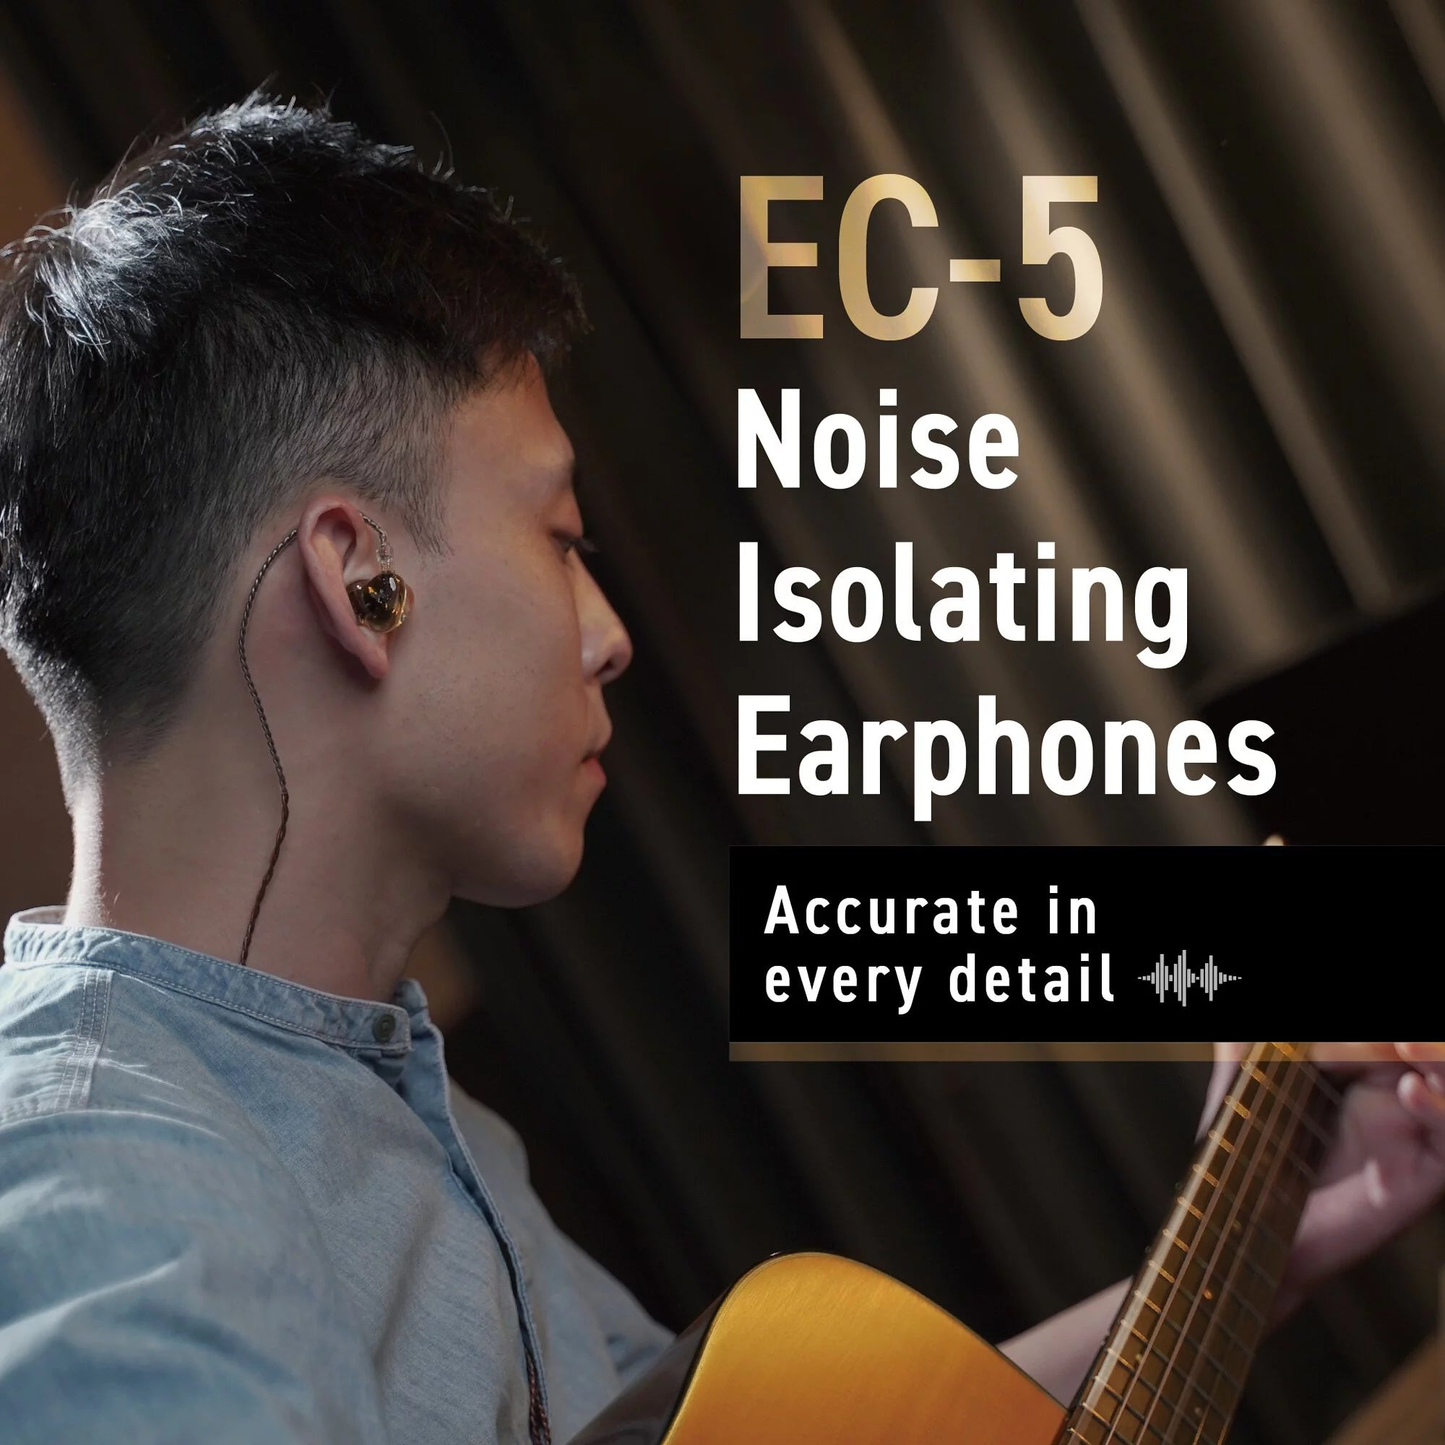 EC-5 Noise Isolating Earphones